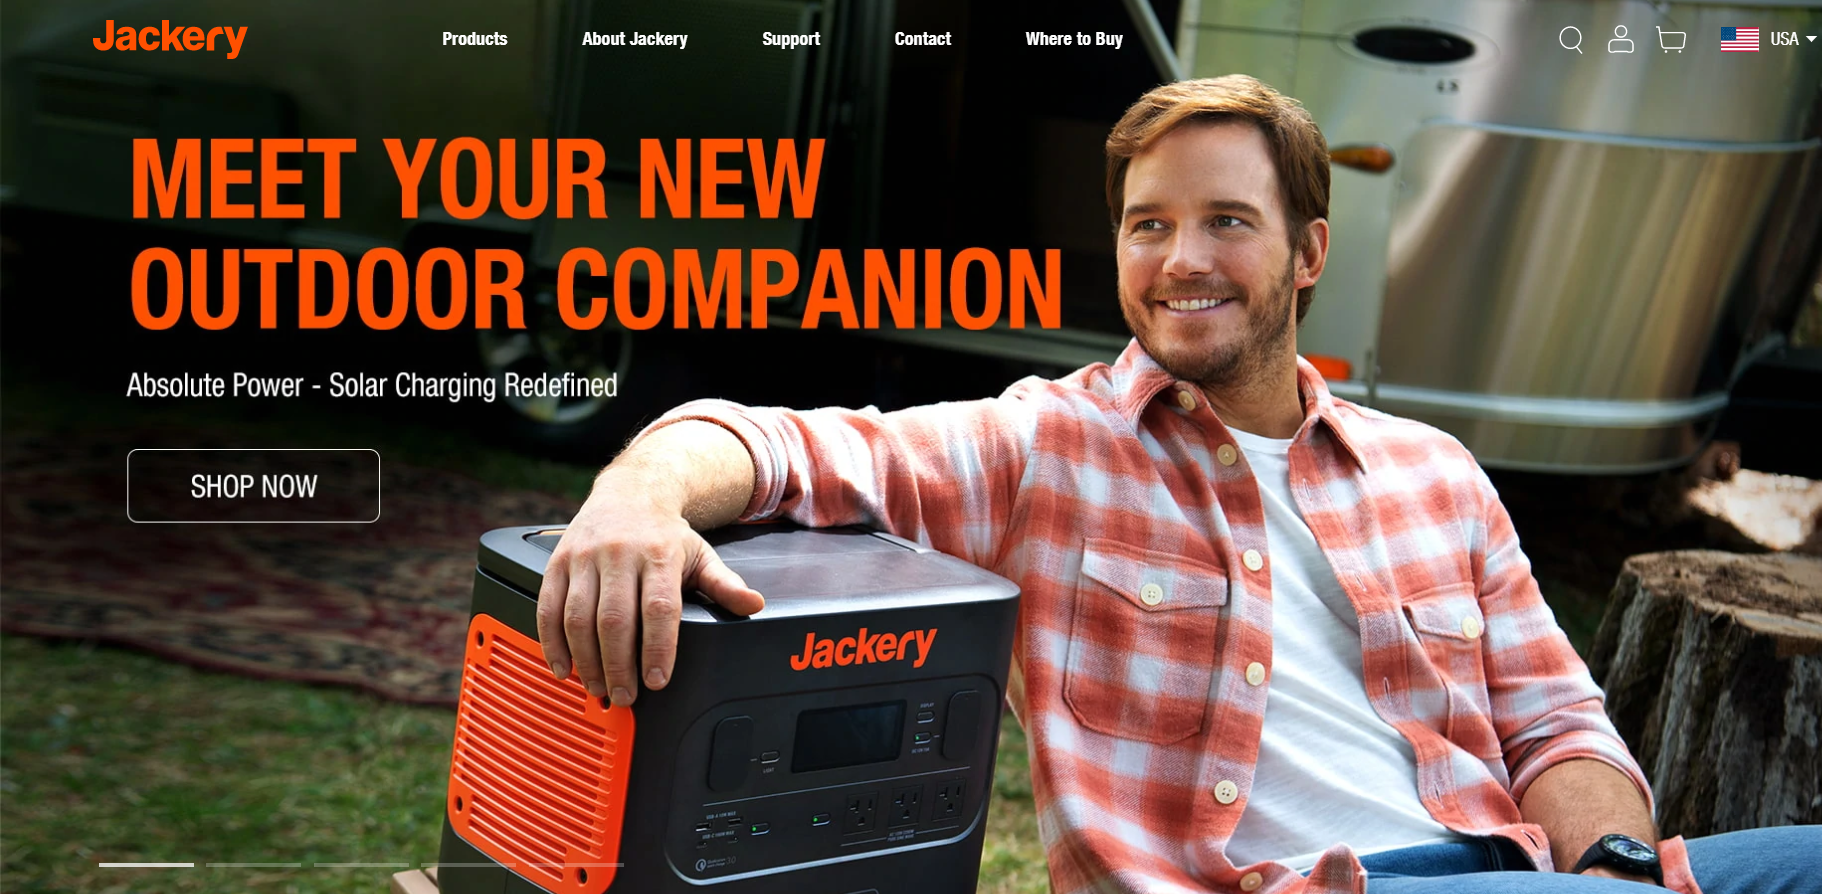 Jackery-homepage-outdoor-companion